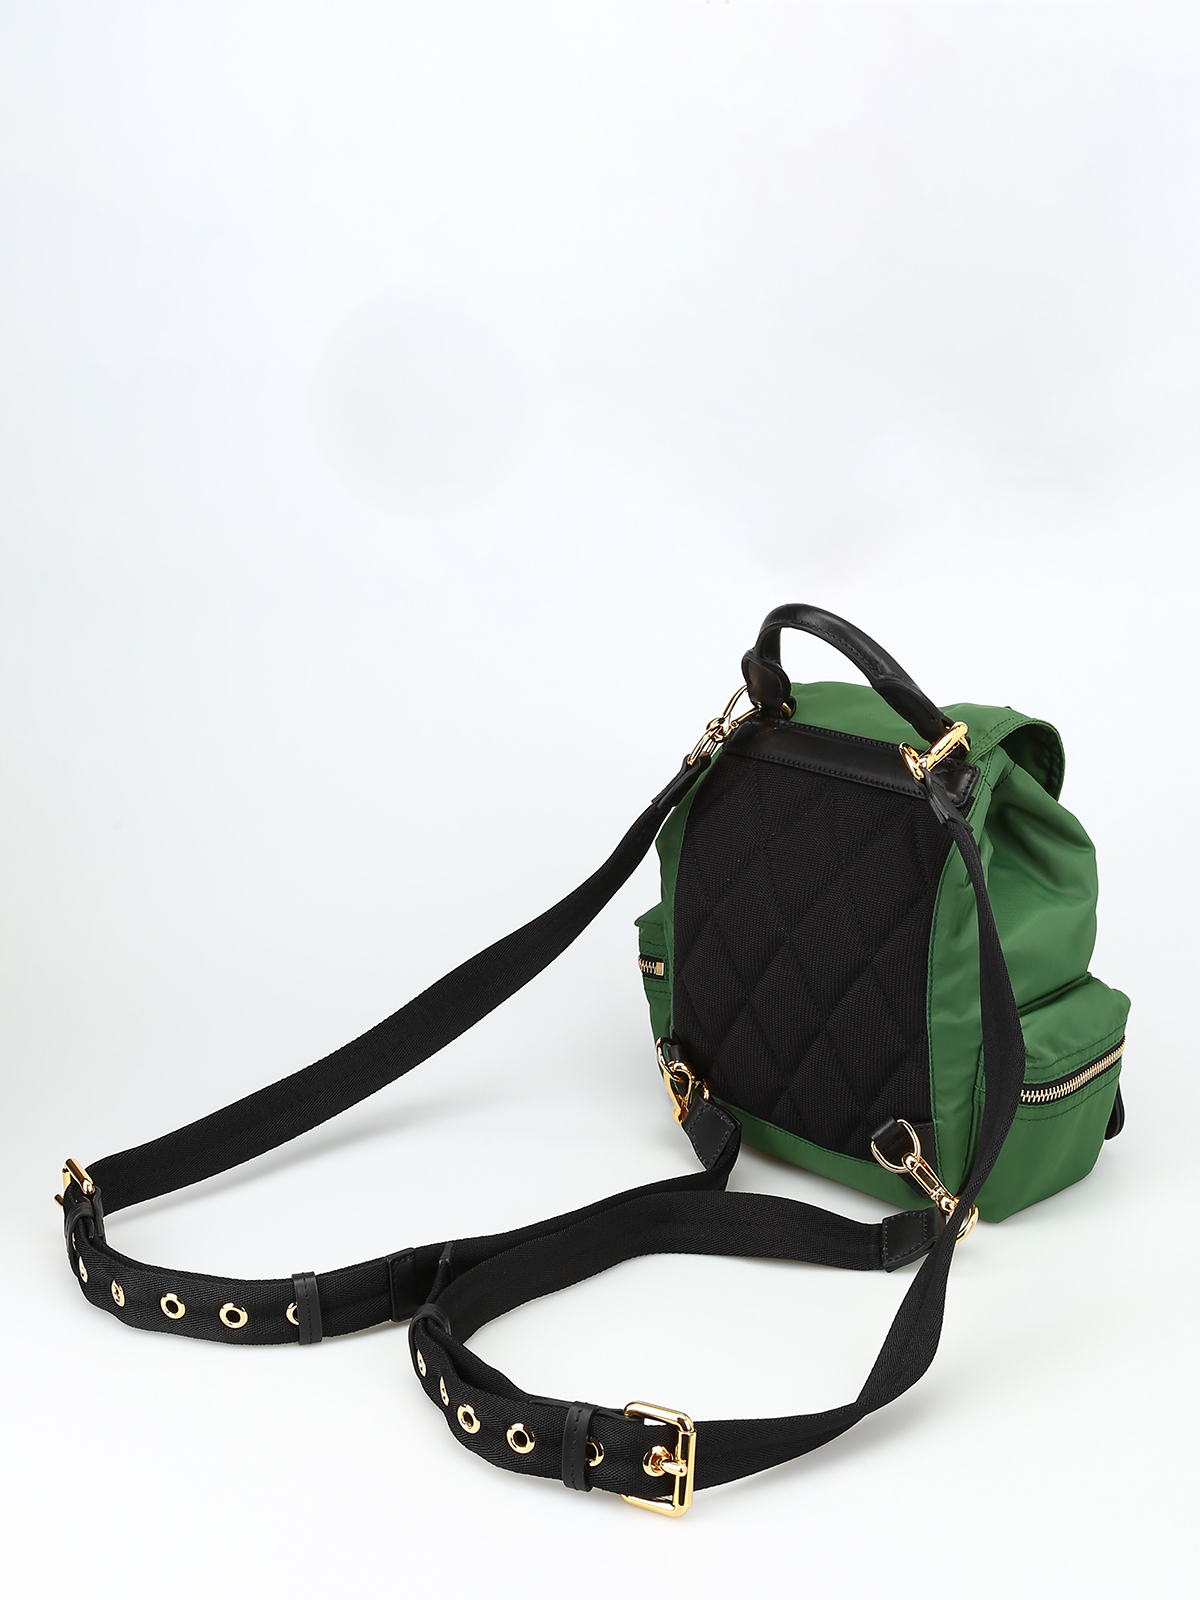 Backpacks Burberry - The Rucksack green nylon small backpack - 4075971